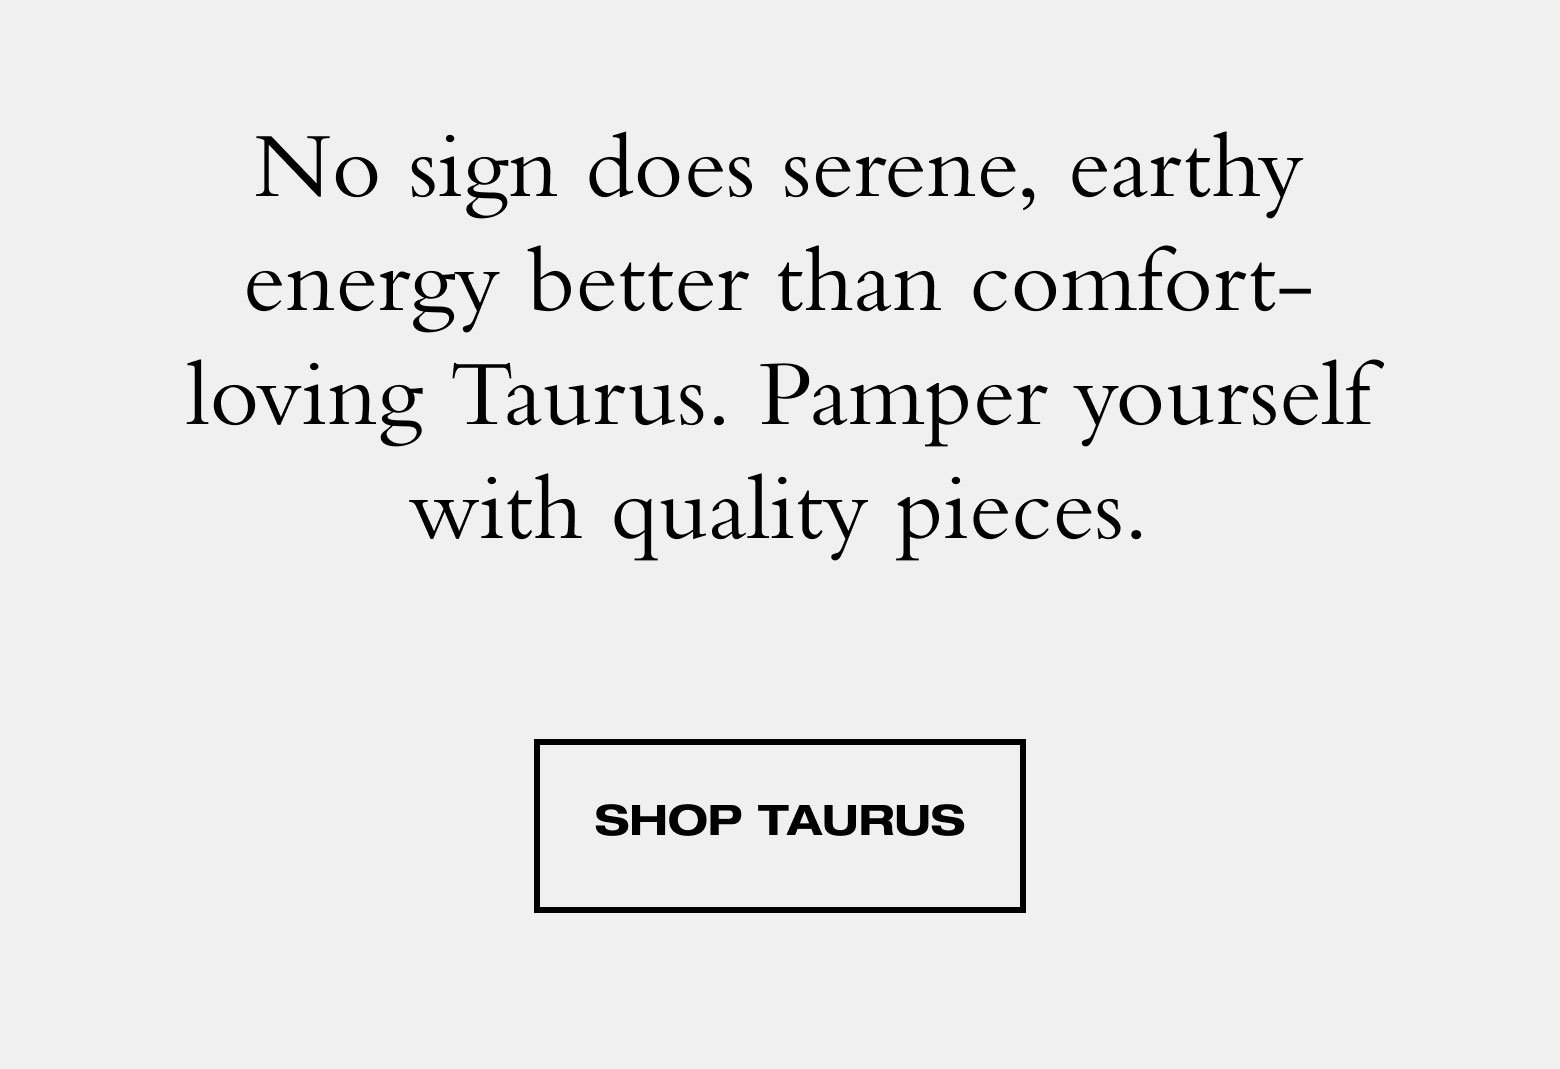 SHOP TAURUS